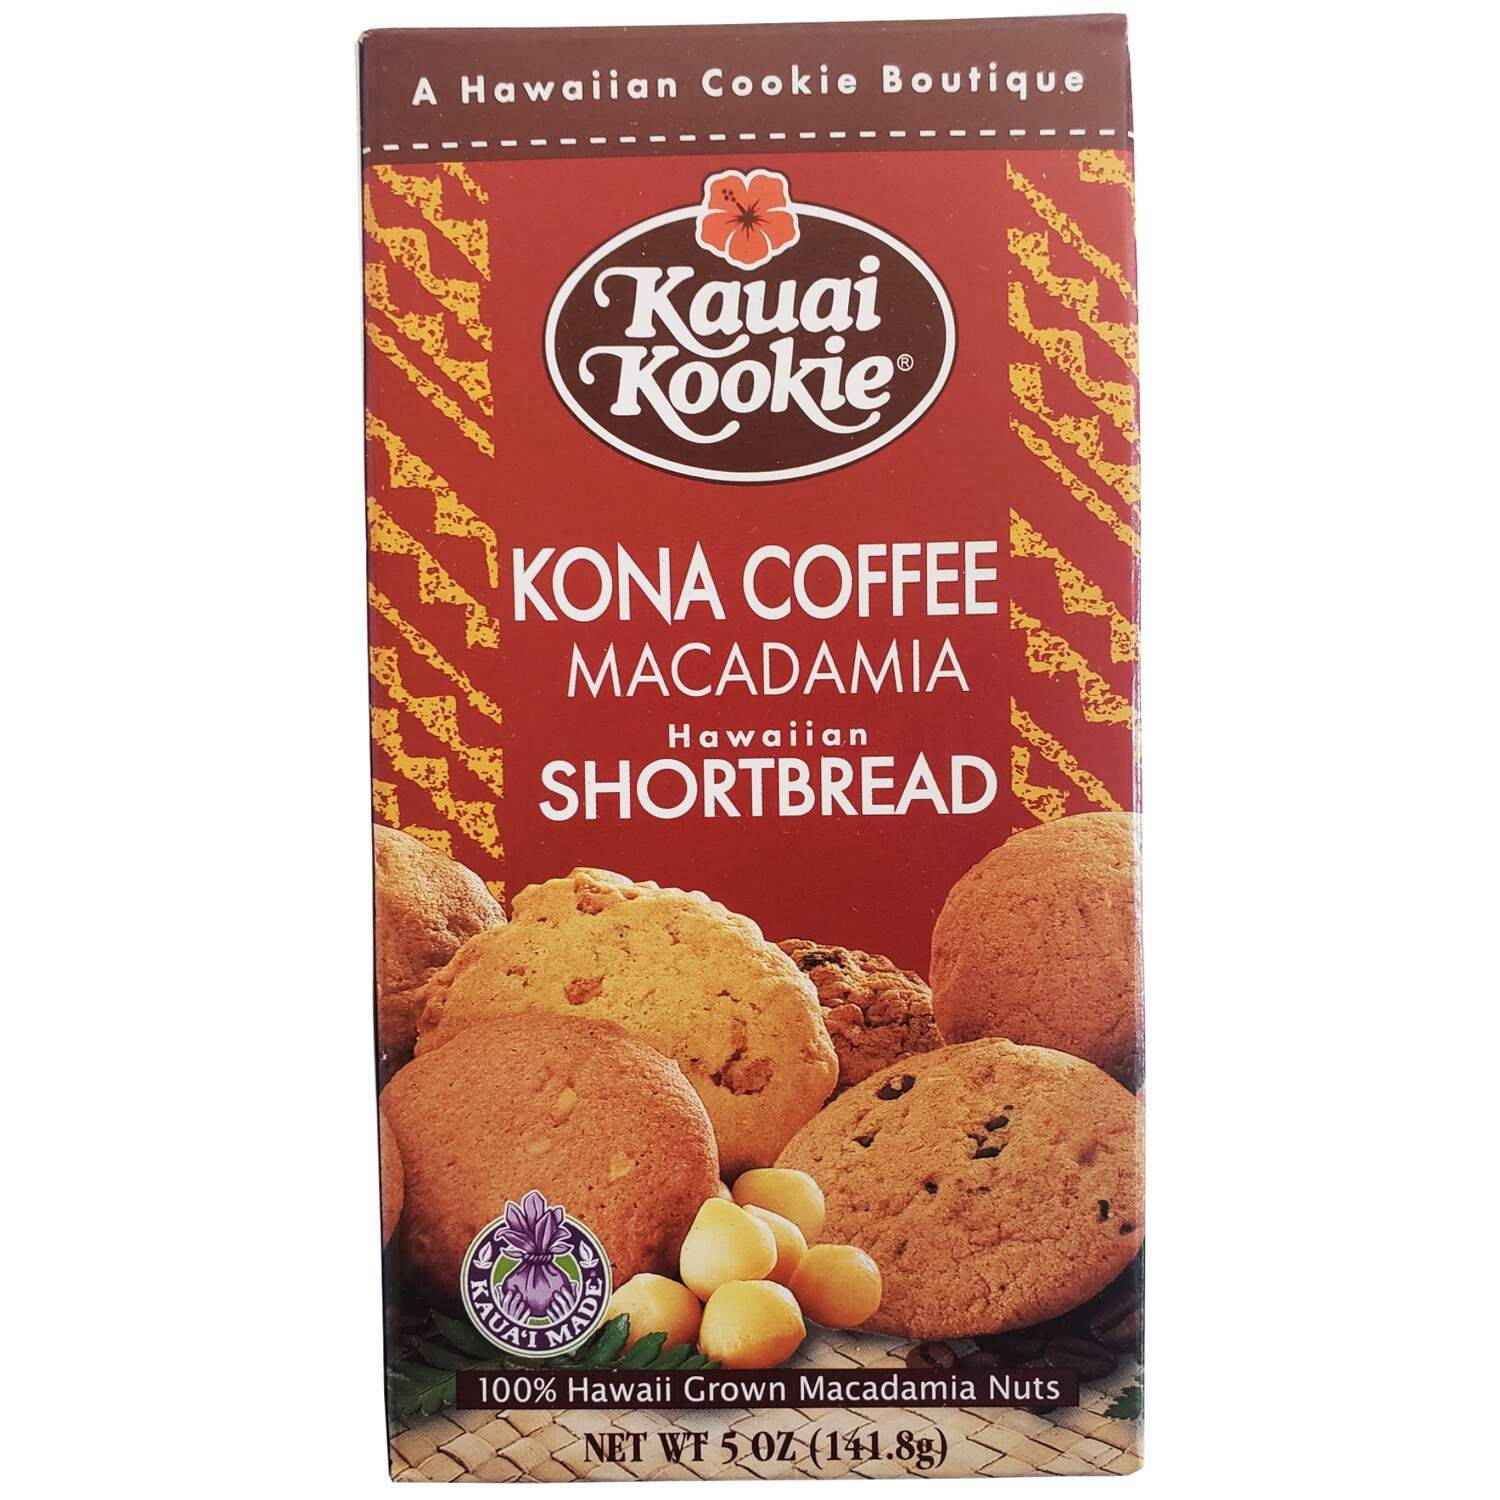 Kauai Kookie Kona Coffee Macadamia Cookies 5 oz